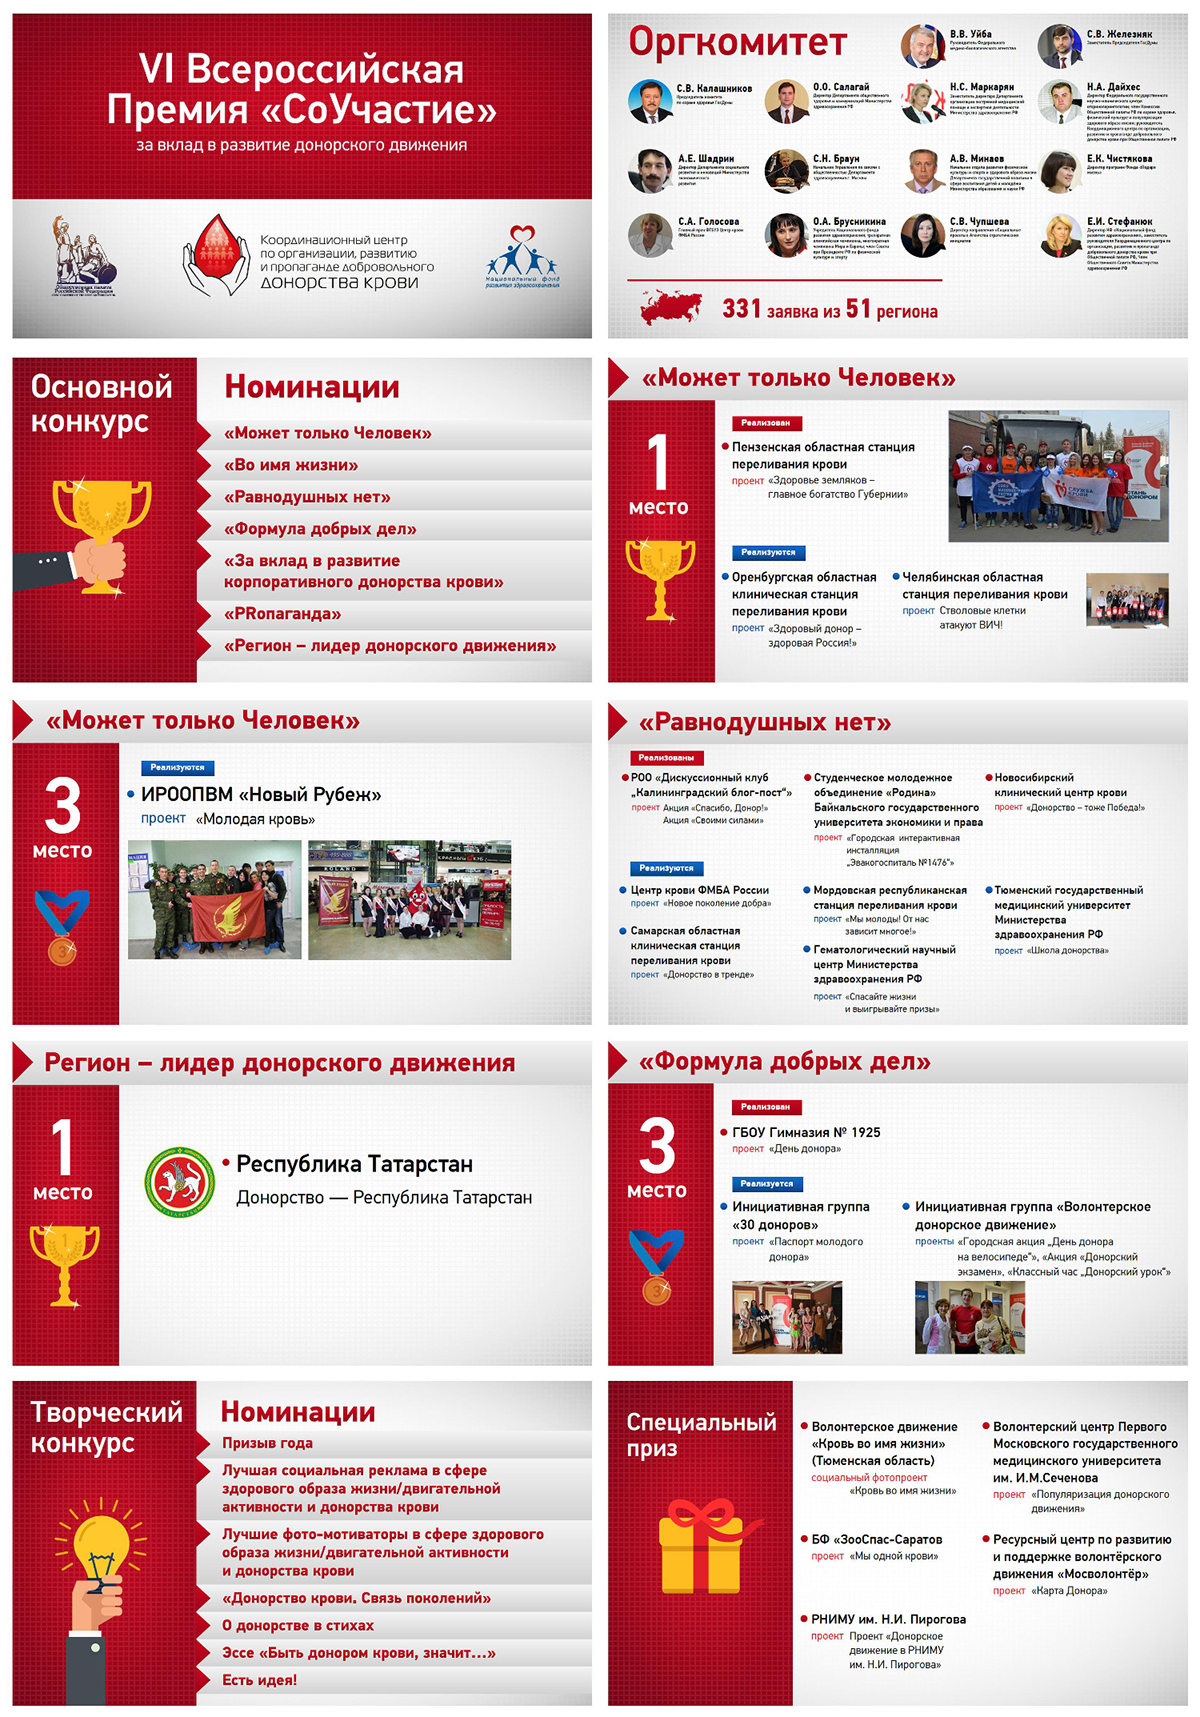 presentation award COMPLICITY winners info-step infostep information design infographics